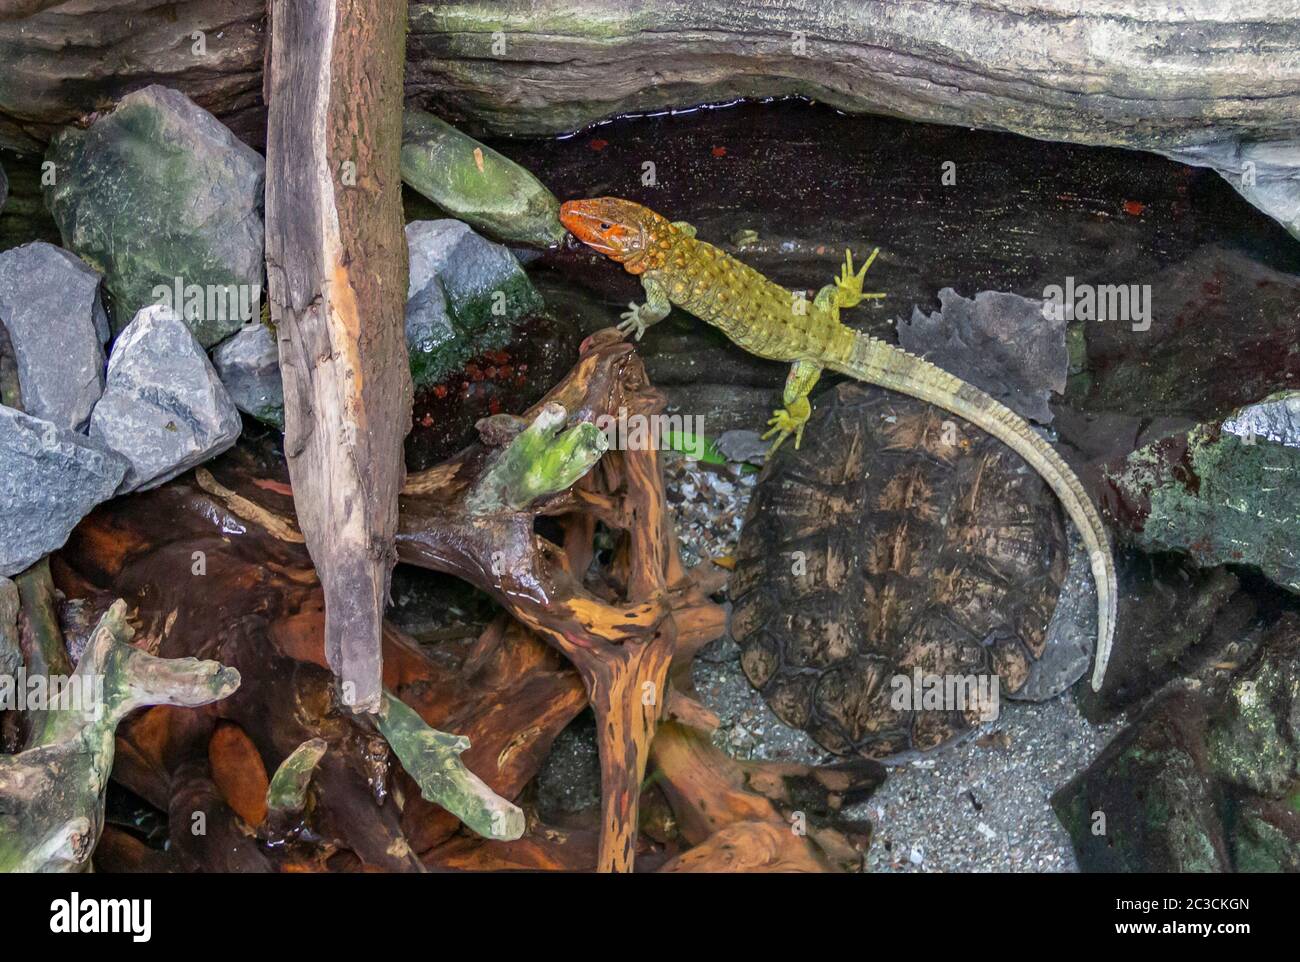 a Northern caiman lizard and a Mata mata turtle in riparian ambiance Stock Photo